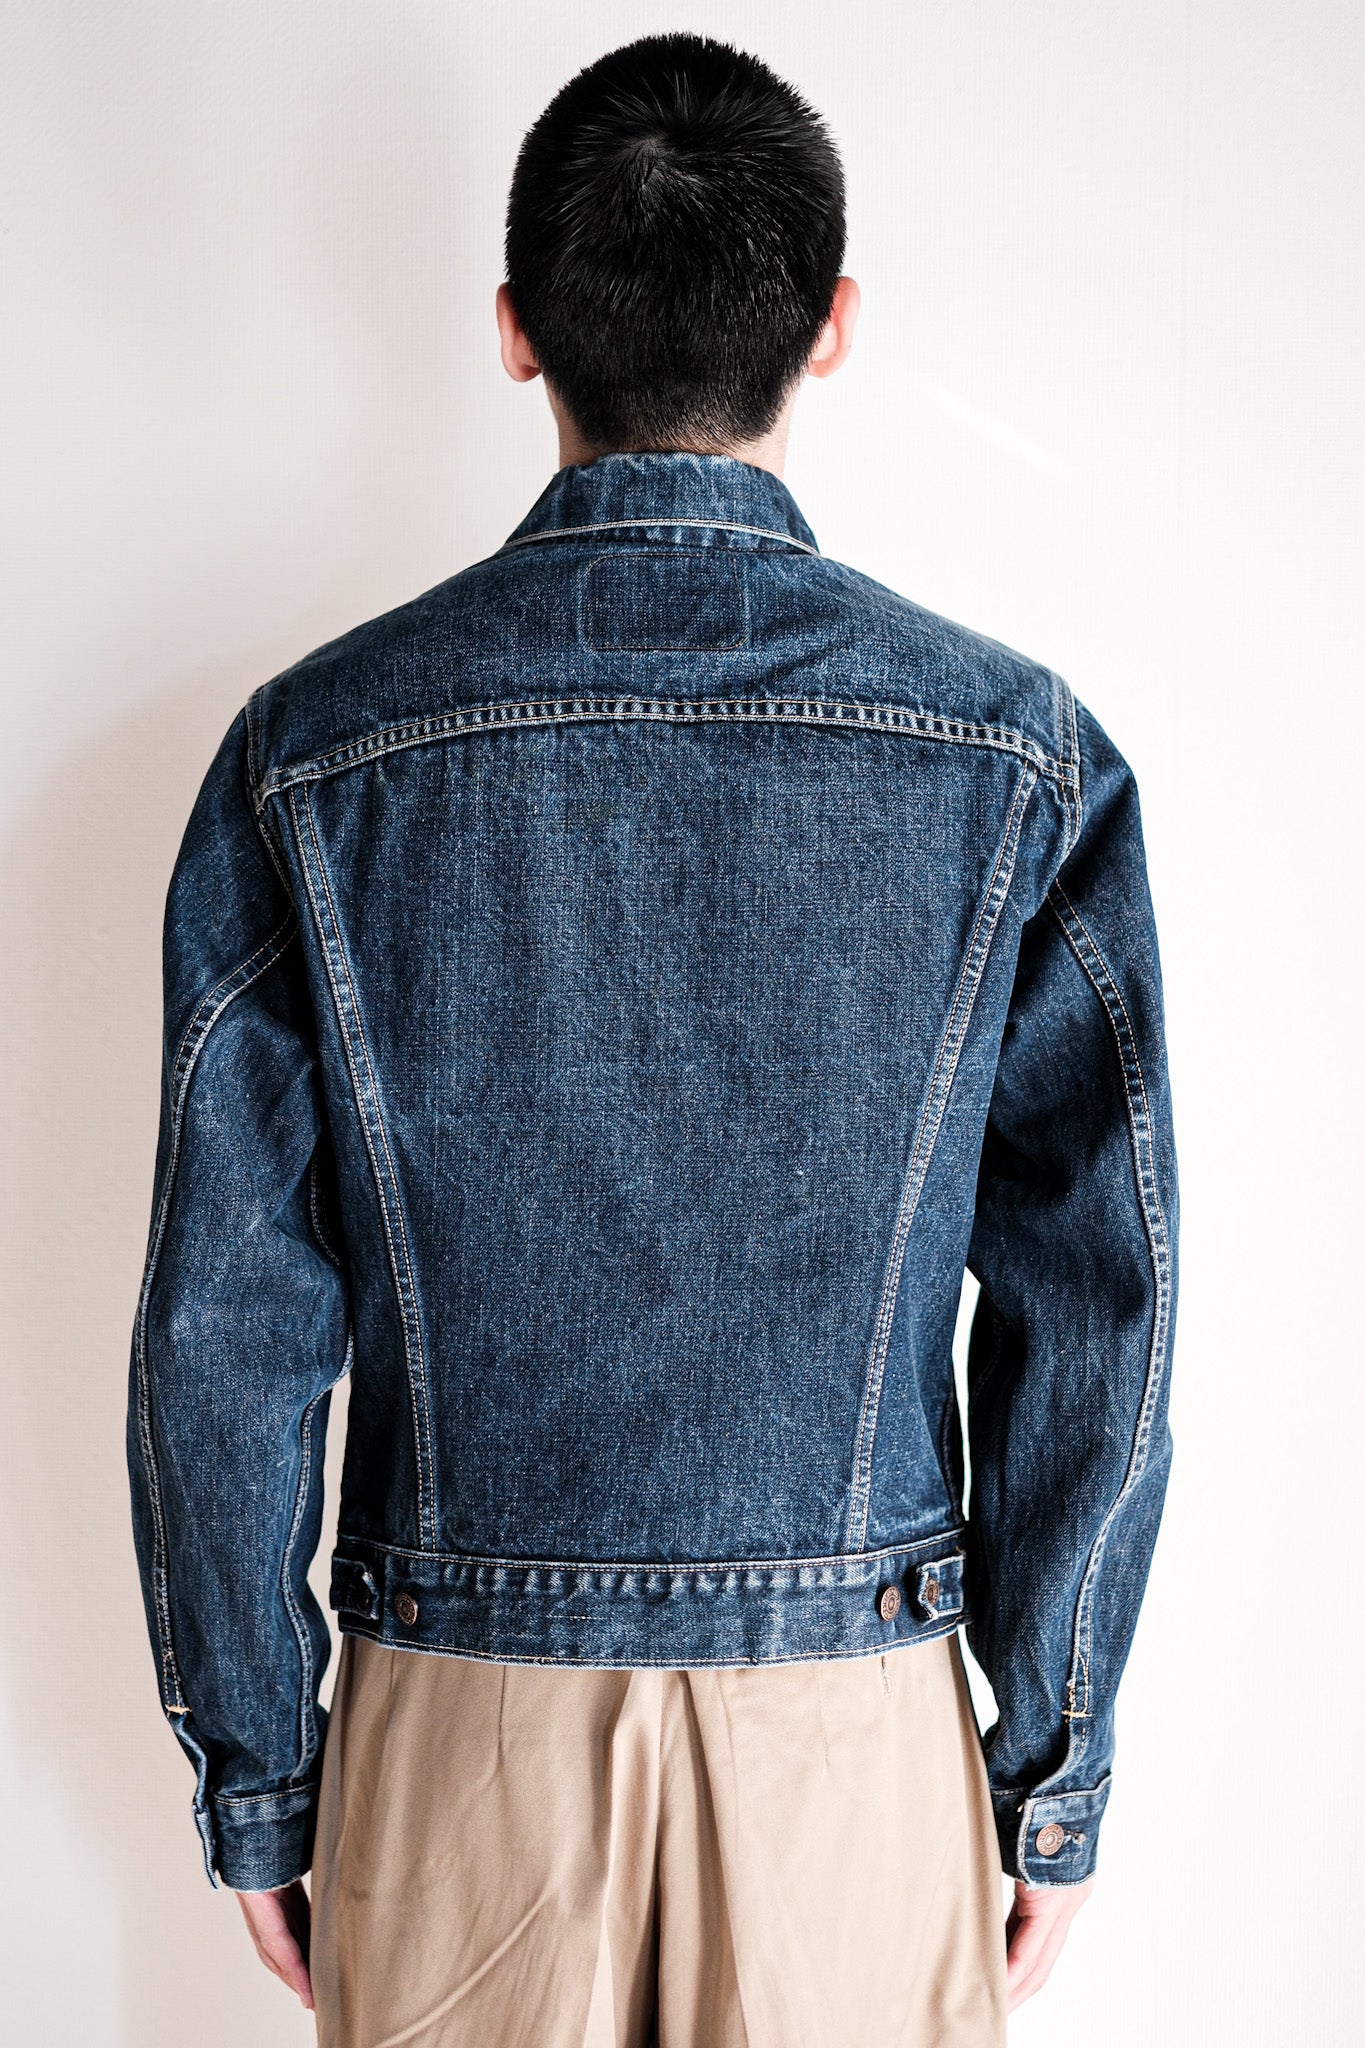 [〜60年代] Vintage Levi的557牛仔夾克尺寸。40“ Big E”